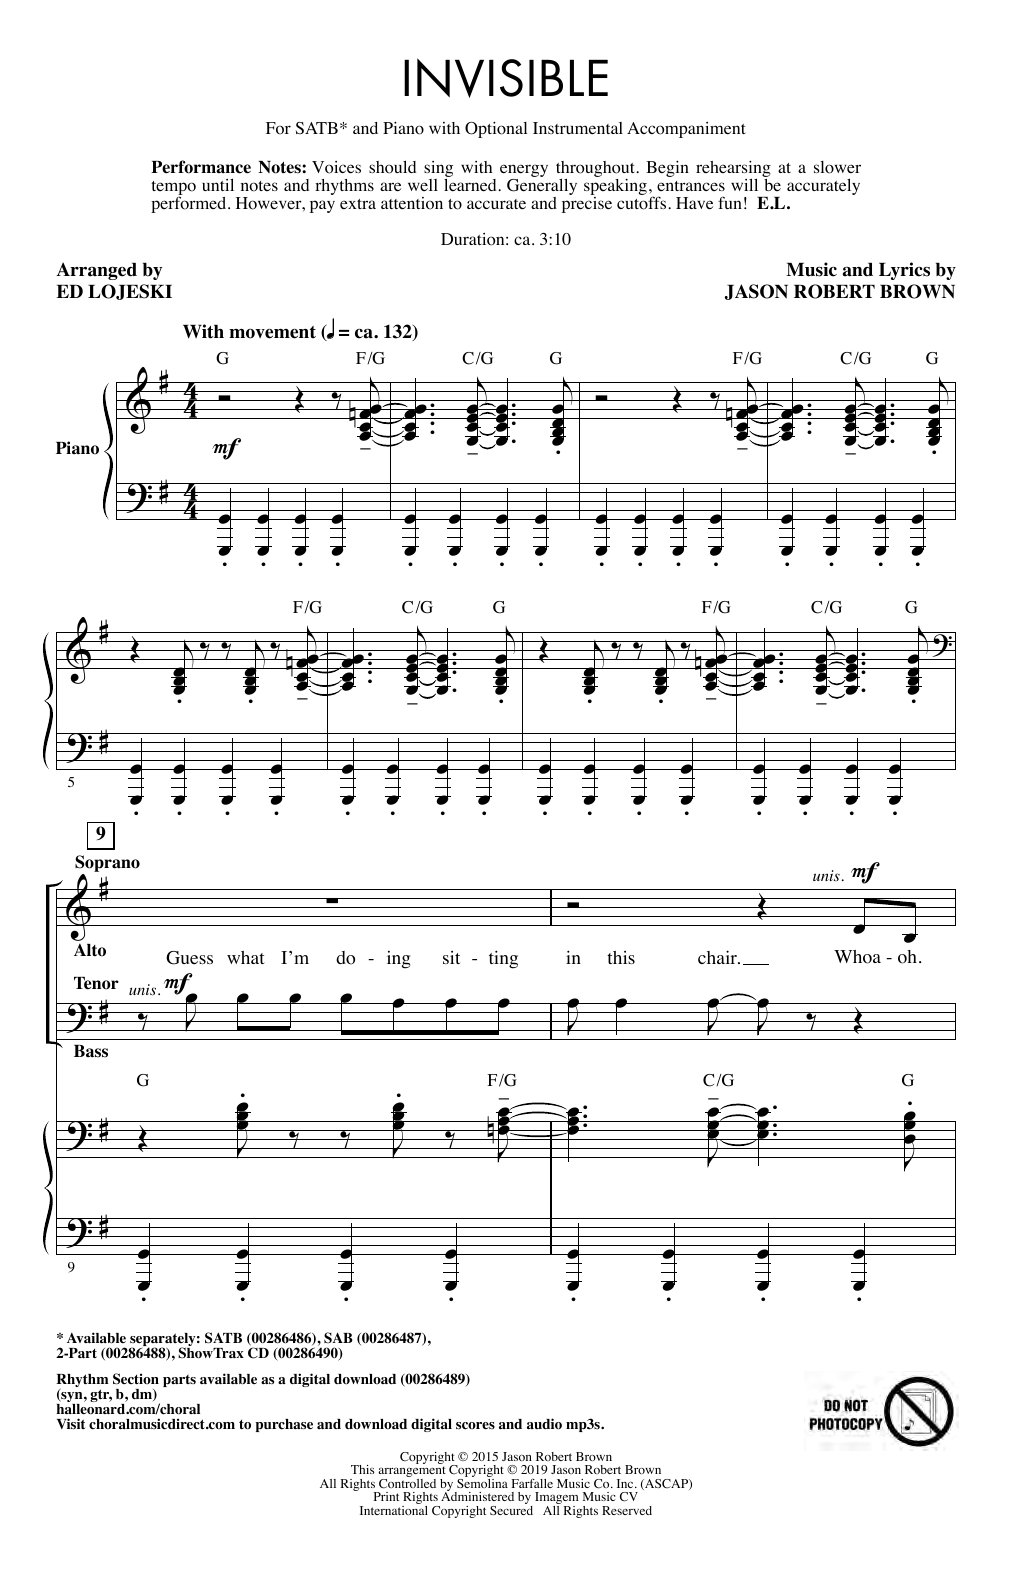 Jason Robert Brown Invisible (arr. Ed Lojeski) Sheet Music Notes & Chords for 2-Part Choir - Download or Print PDF